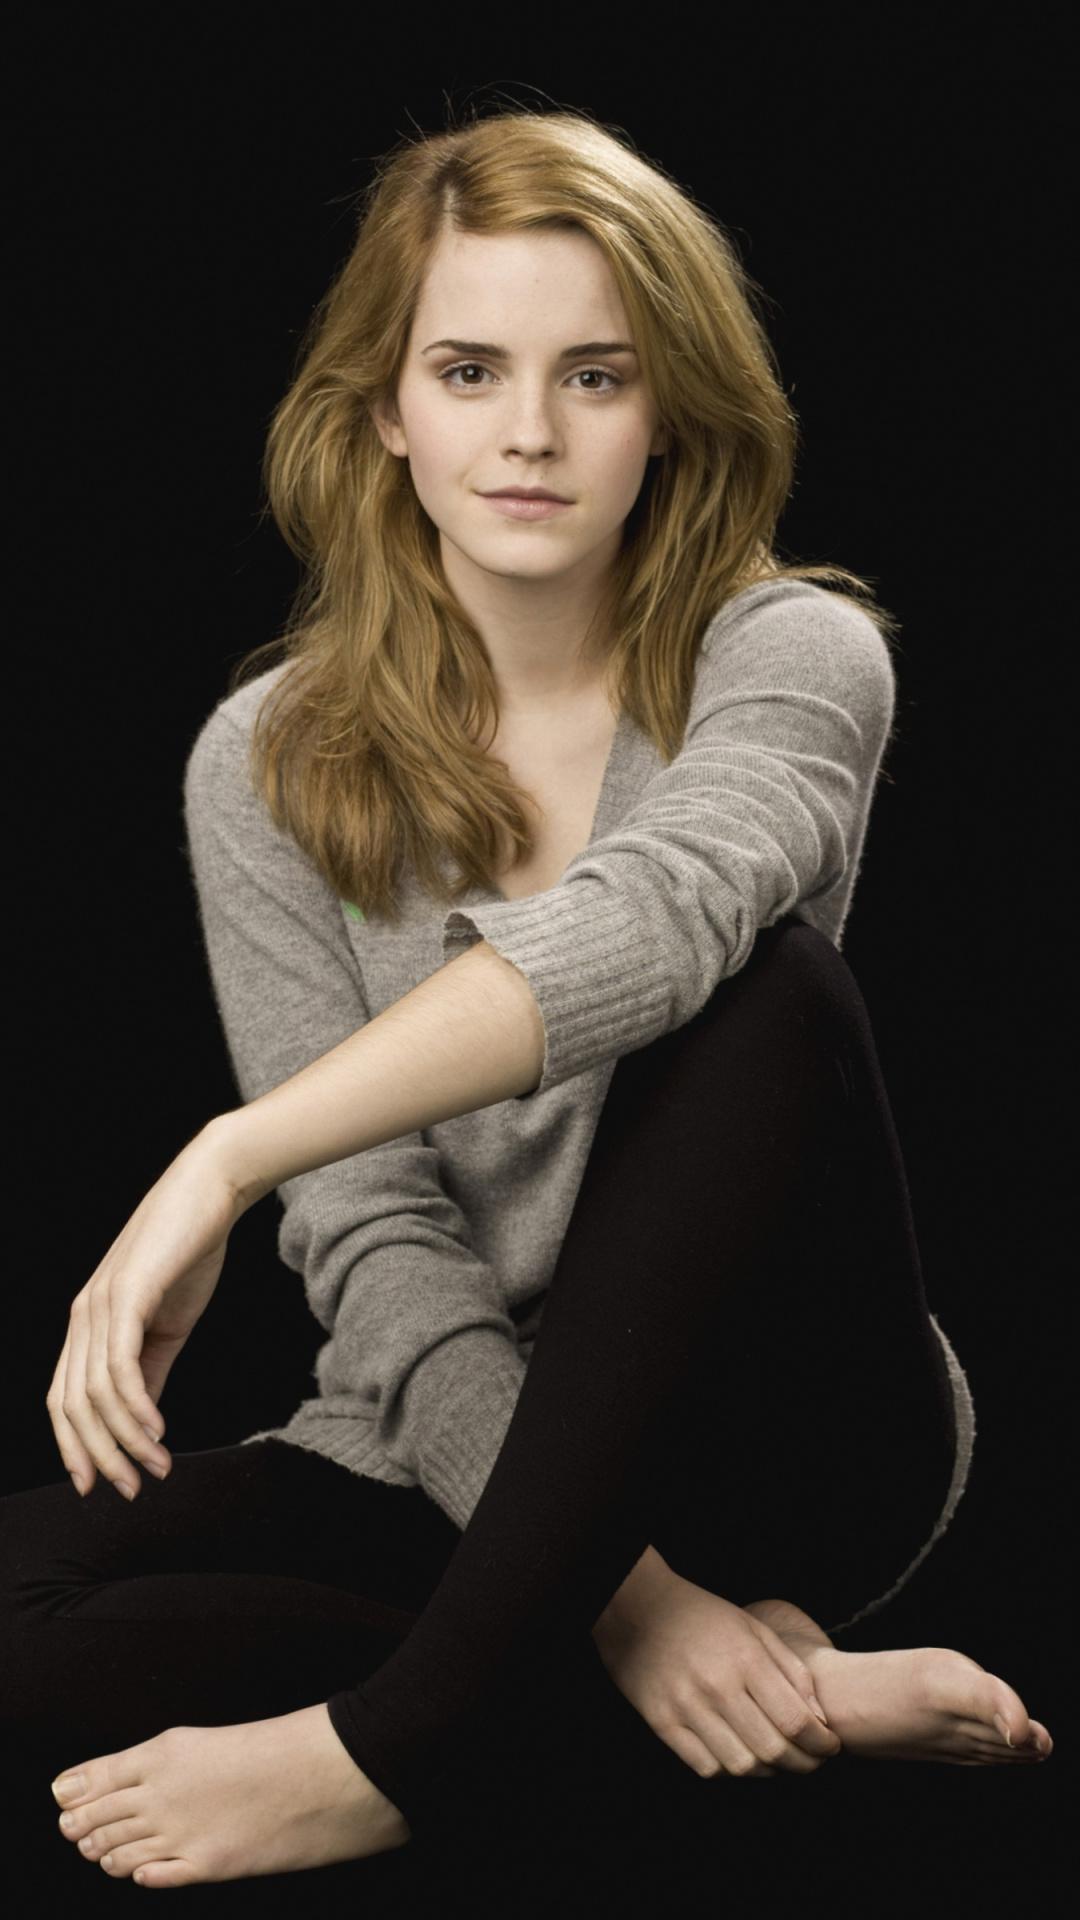 Sitting, United Kingdom, Emma Watson, Girl, Human Body